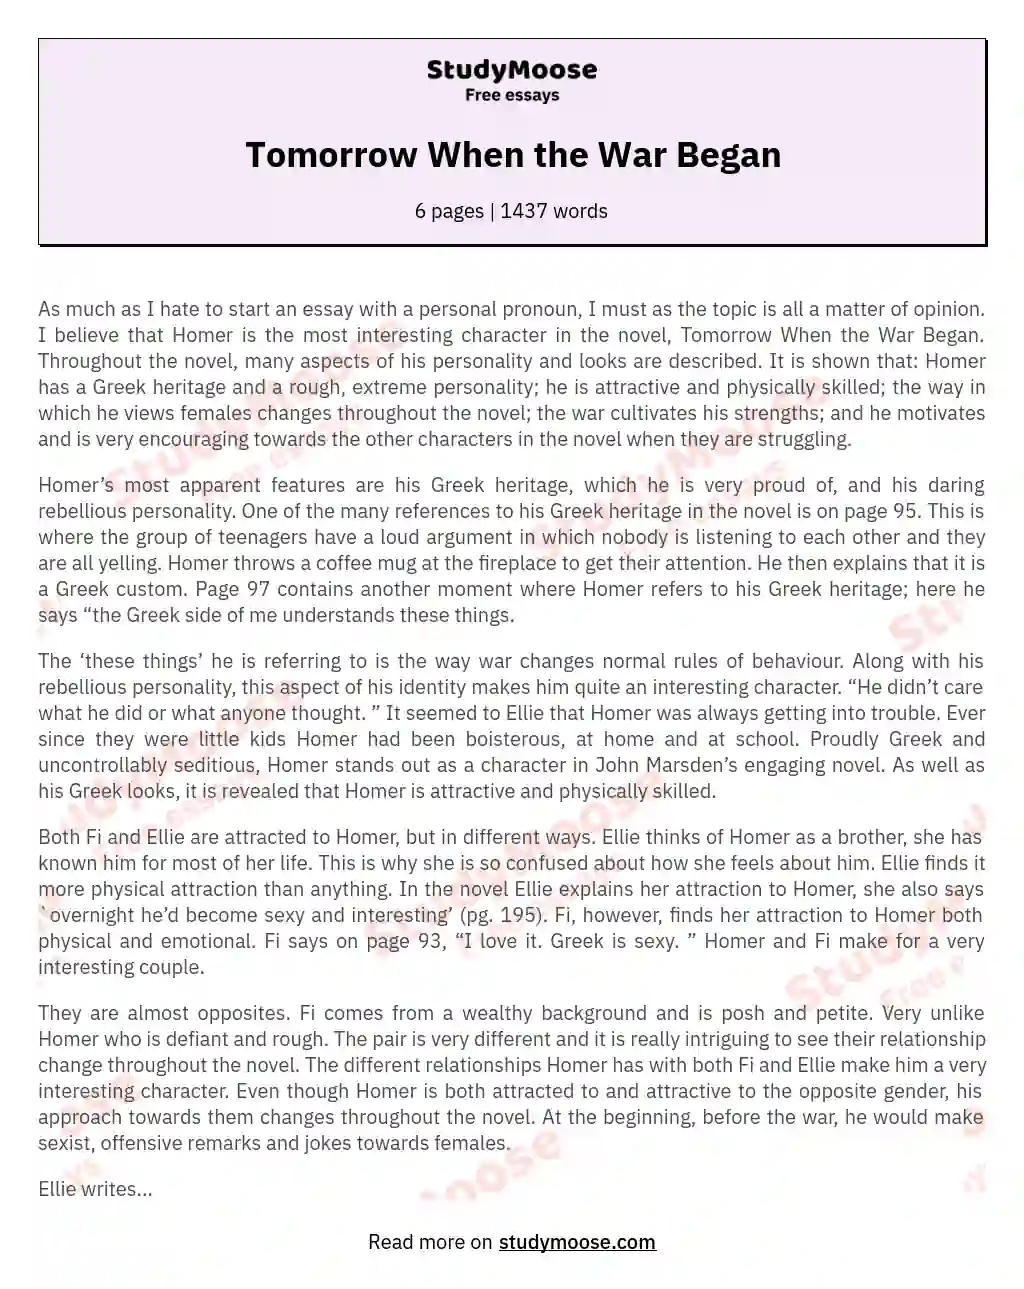 Tomorrow When the War Began essay